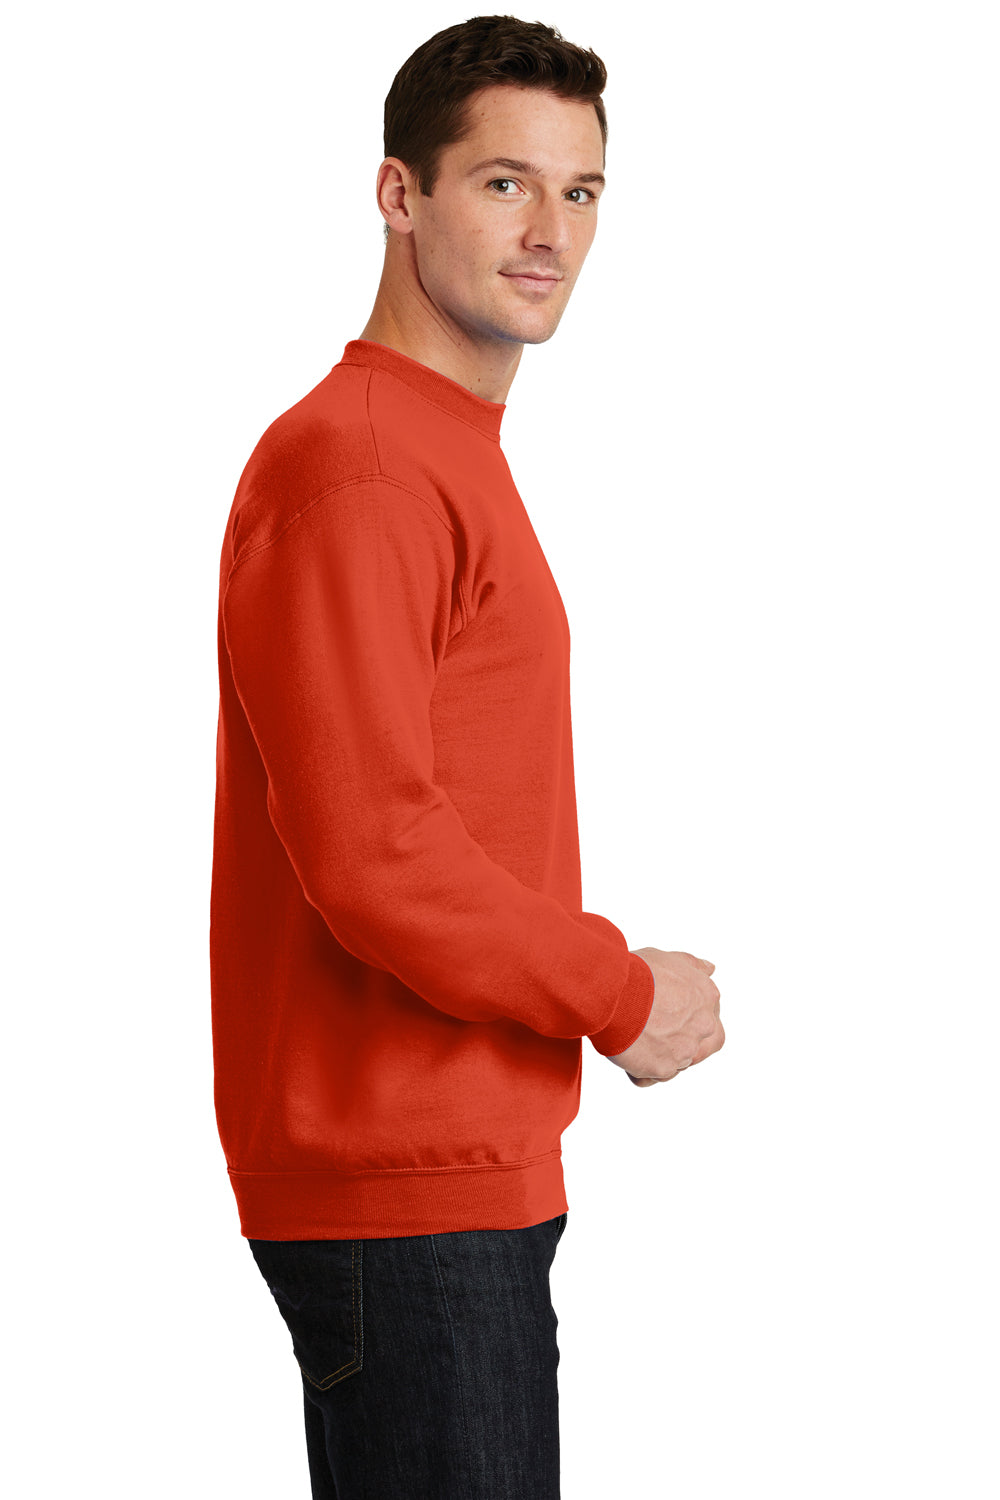 Port & Company PC78 Mens Core Fleece Crewneck Sweatshirt Orange Side